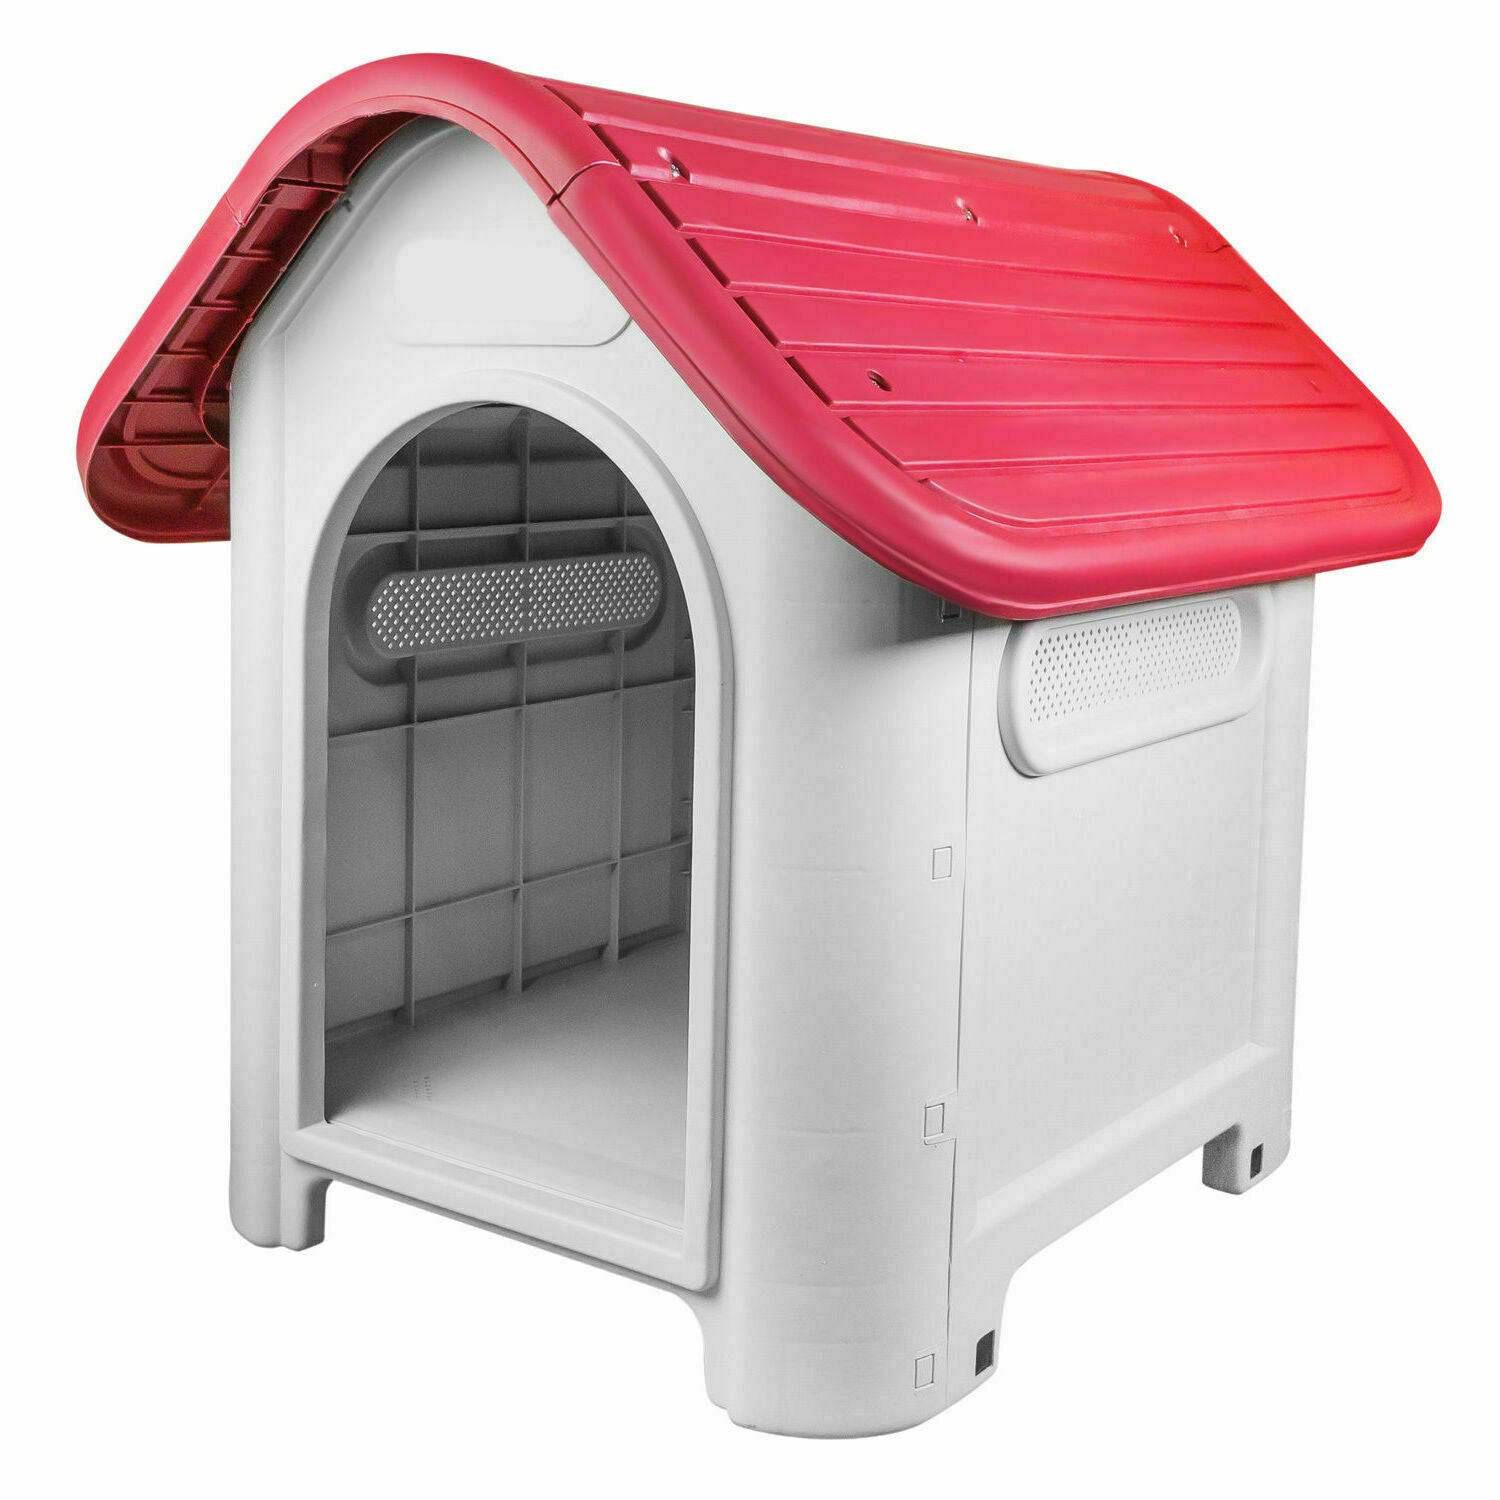 New Pet DOG Kennel CAT House Weatherproof Indoor Outdoor Animal Shelter Red